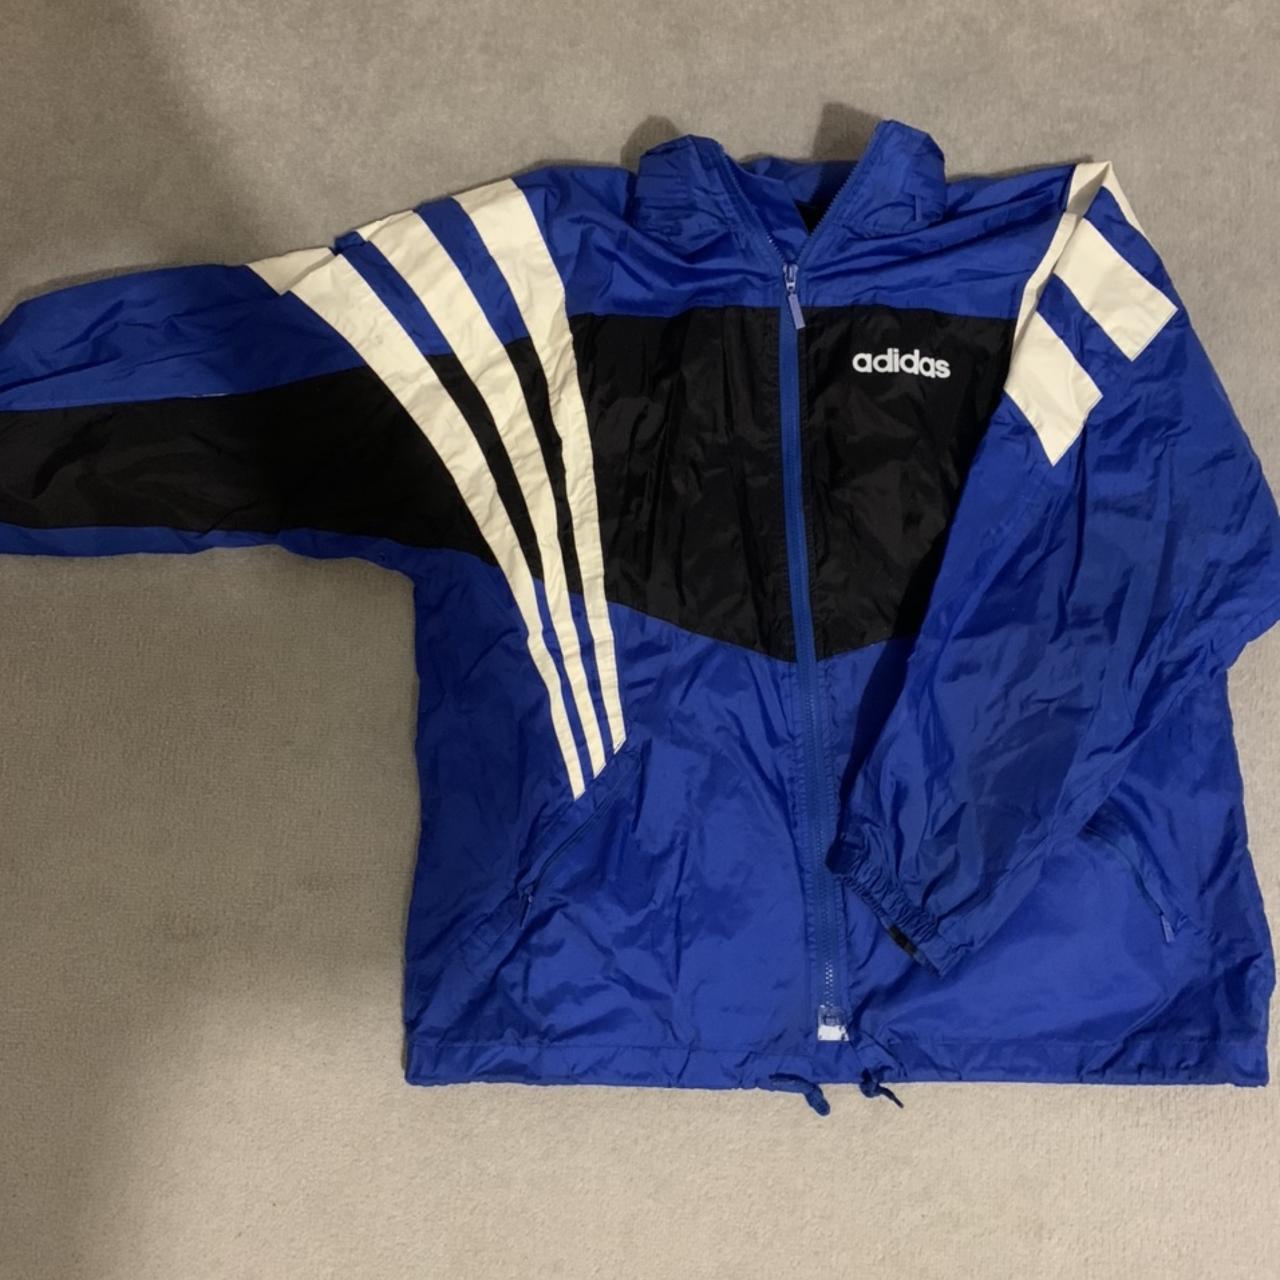 Retro Adidas shell suit jacket 80’s Adidas... - Depop